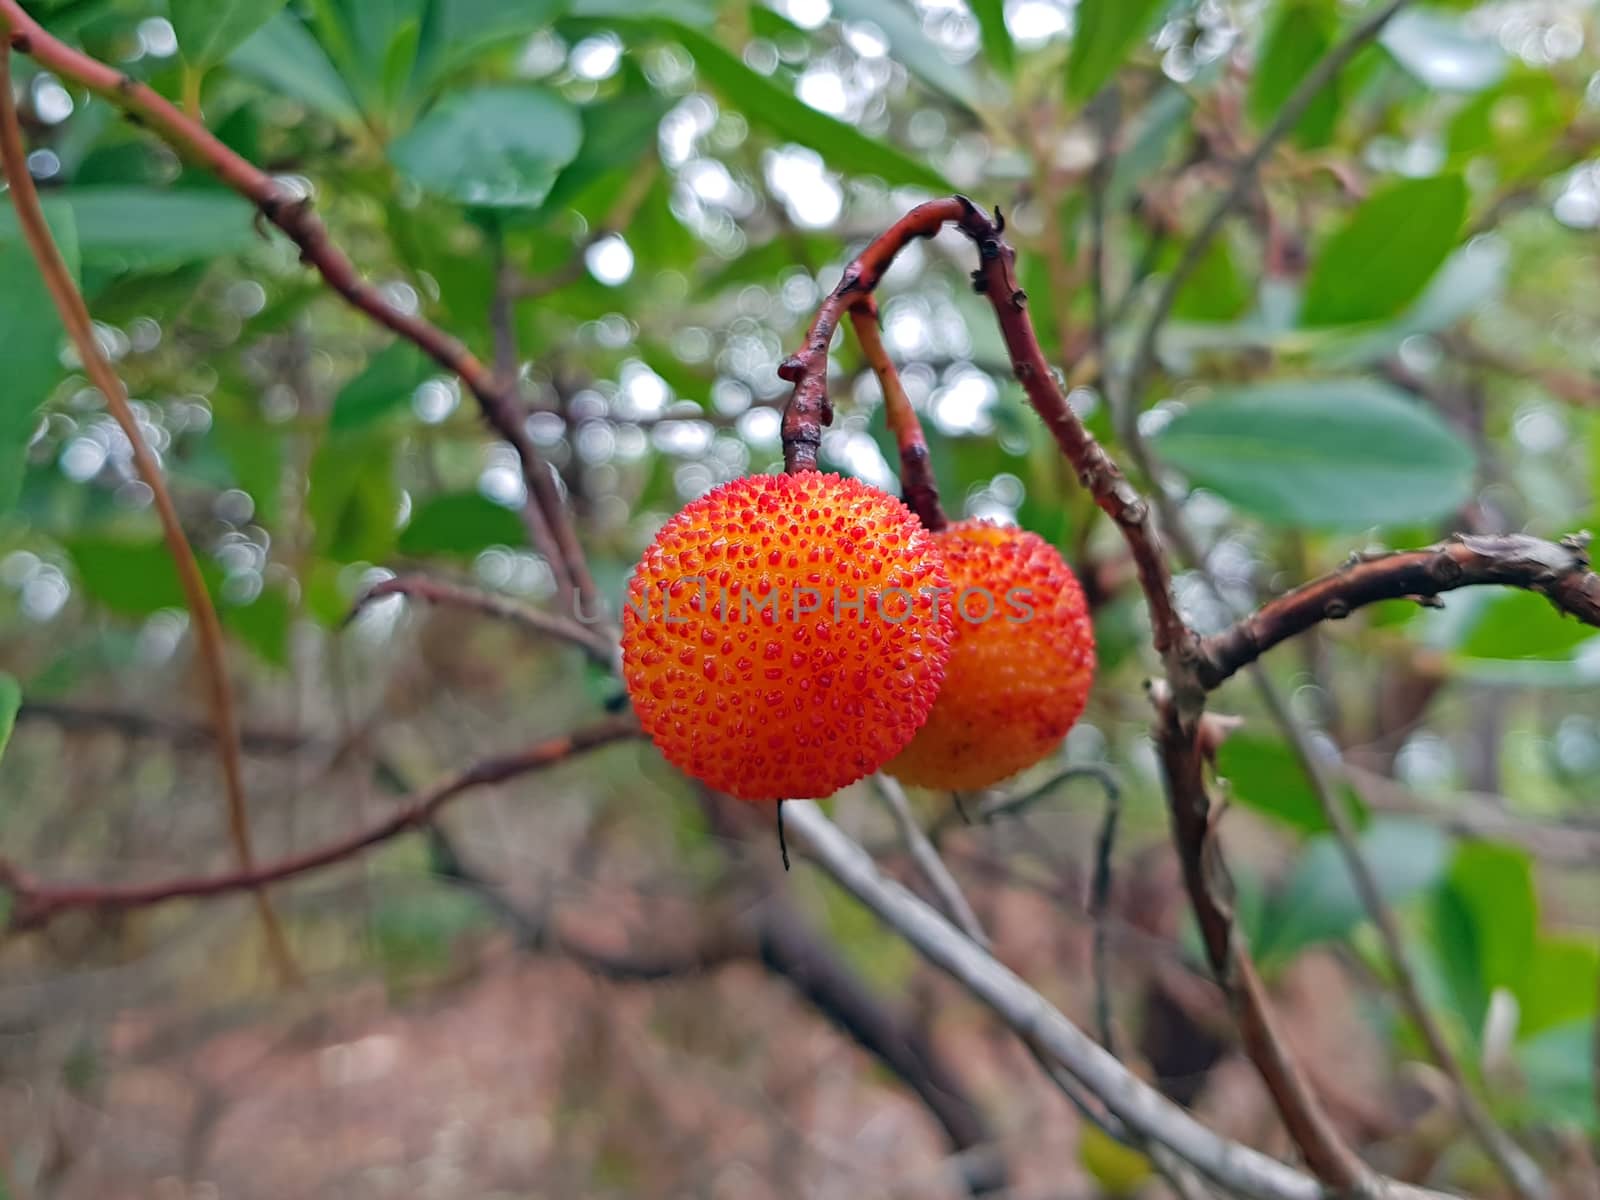 Medronho fruits on a tree ready to be harvest